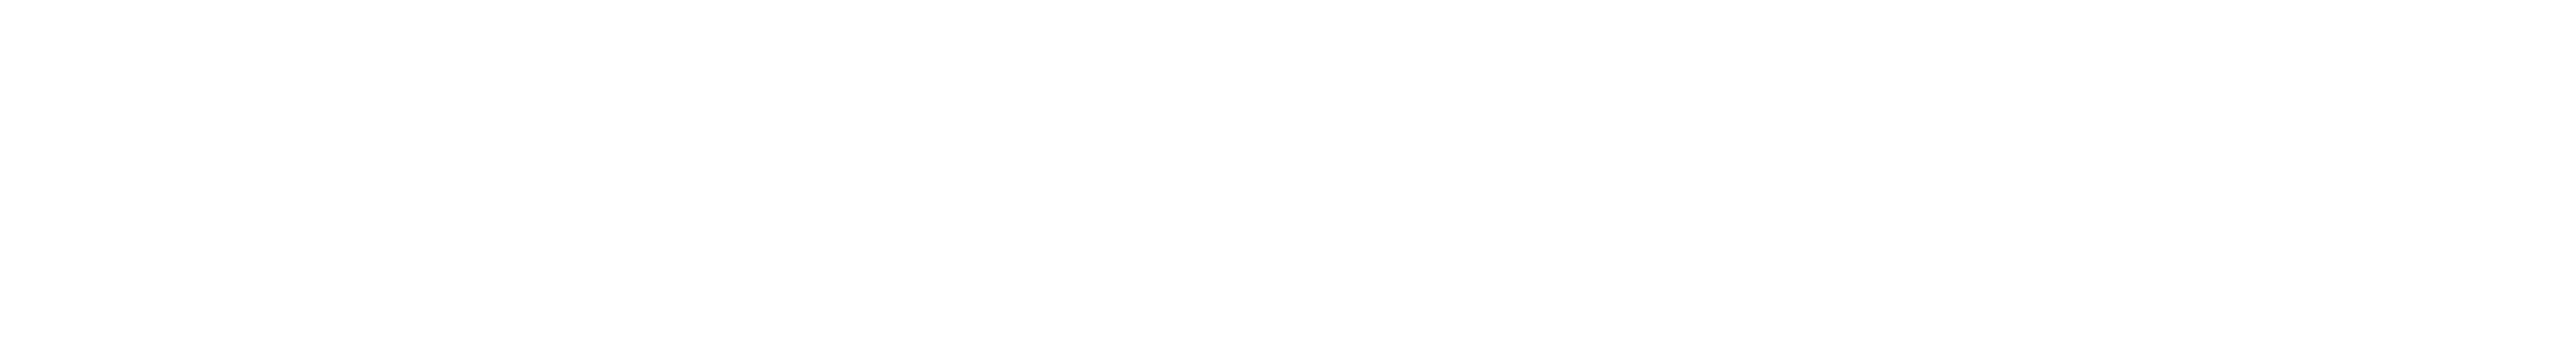 Applied Economics Logo White